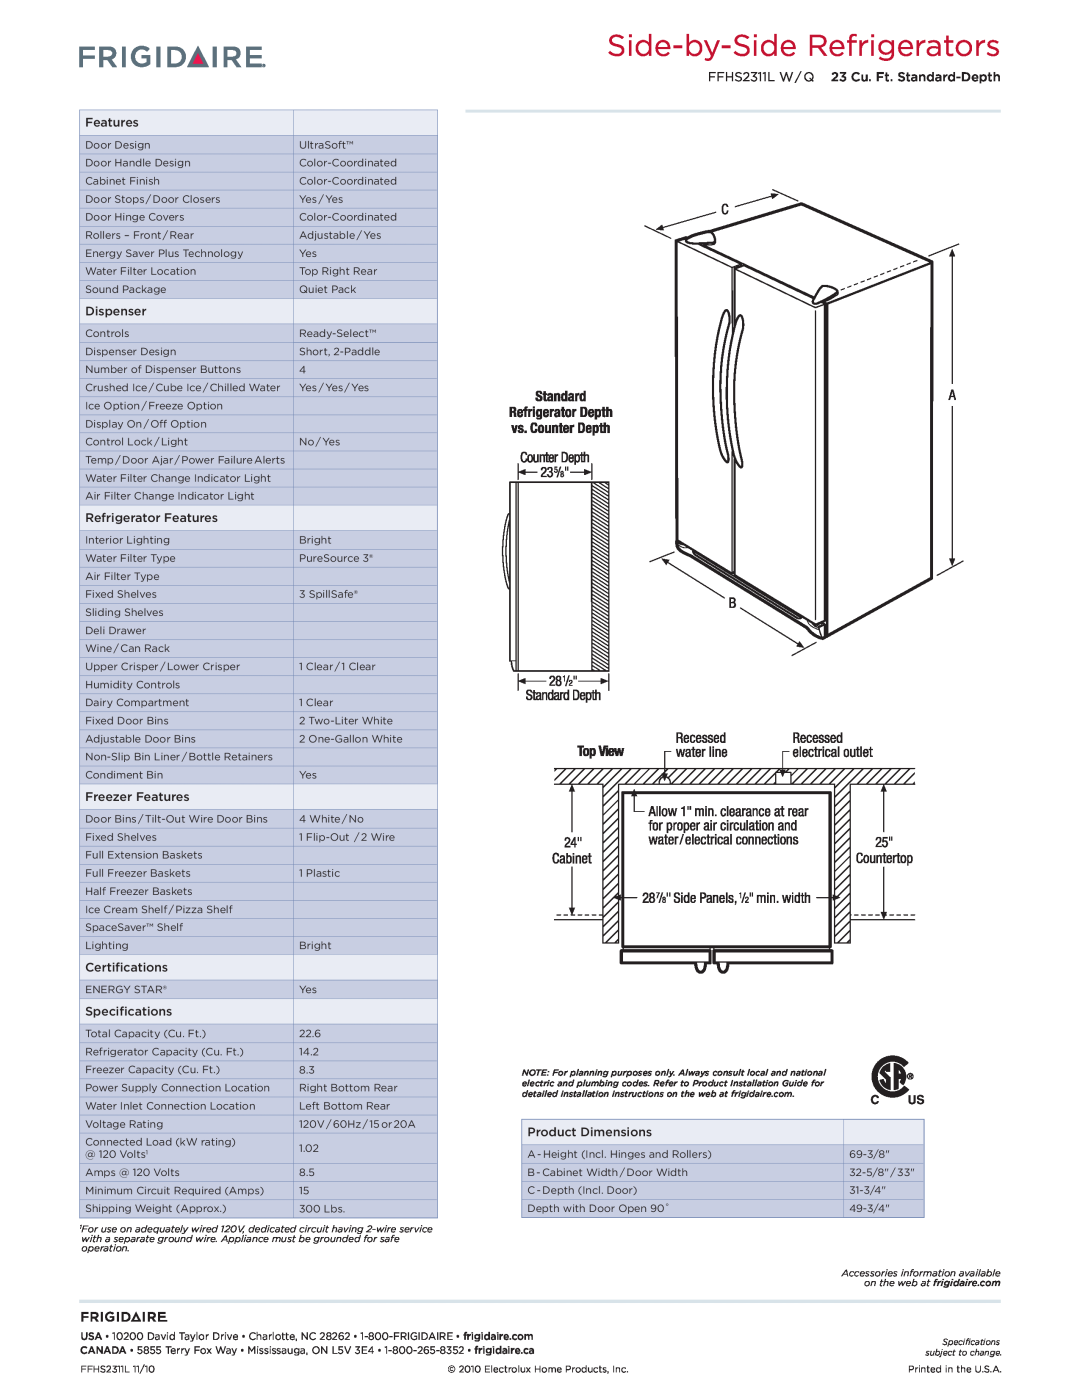 Frigidaire FFHS2311L W/Q Side-by-SideRefrigerators, FFHS2311L W / Q 23 Cu. Ft. Standard-Depth, Features, Dispenser 